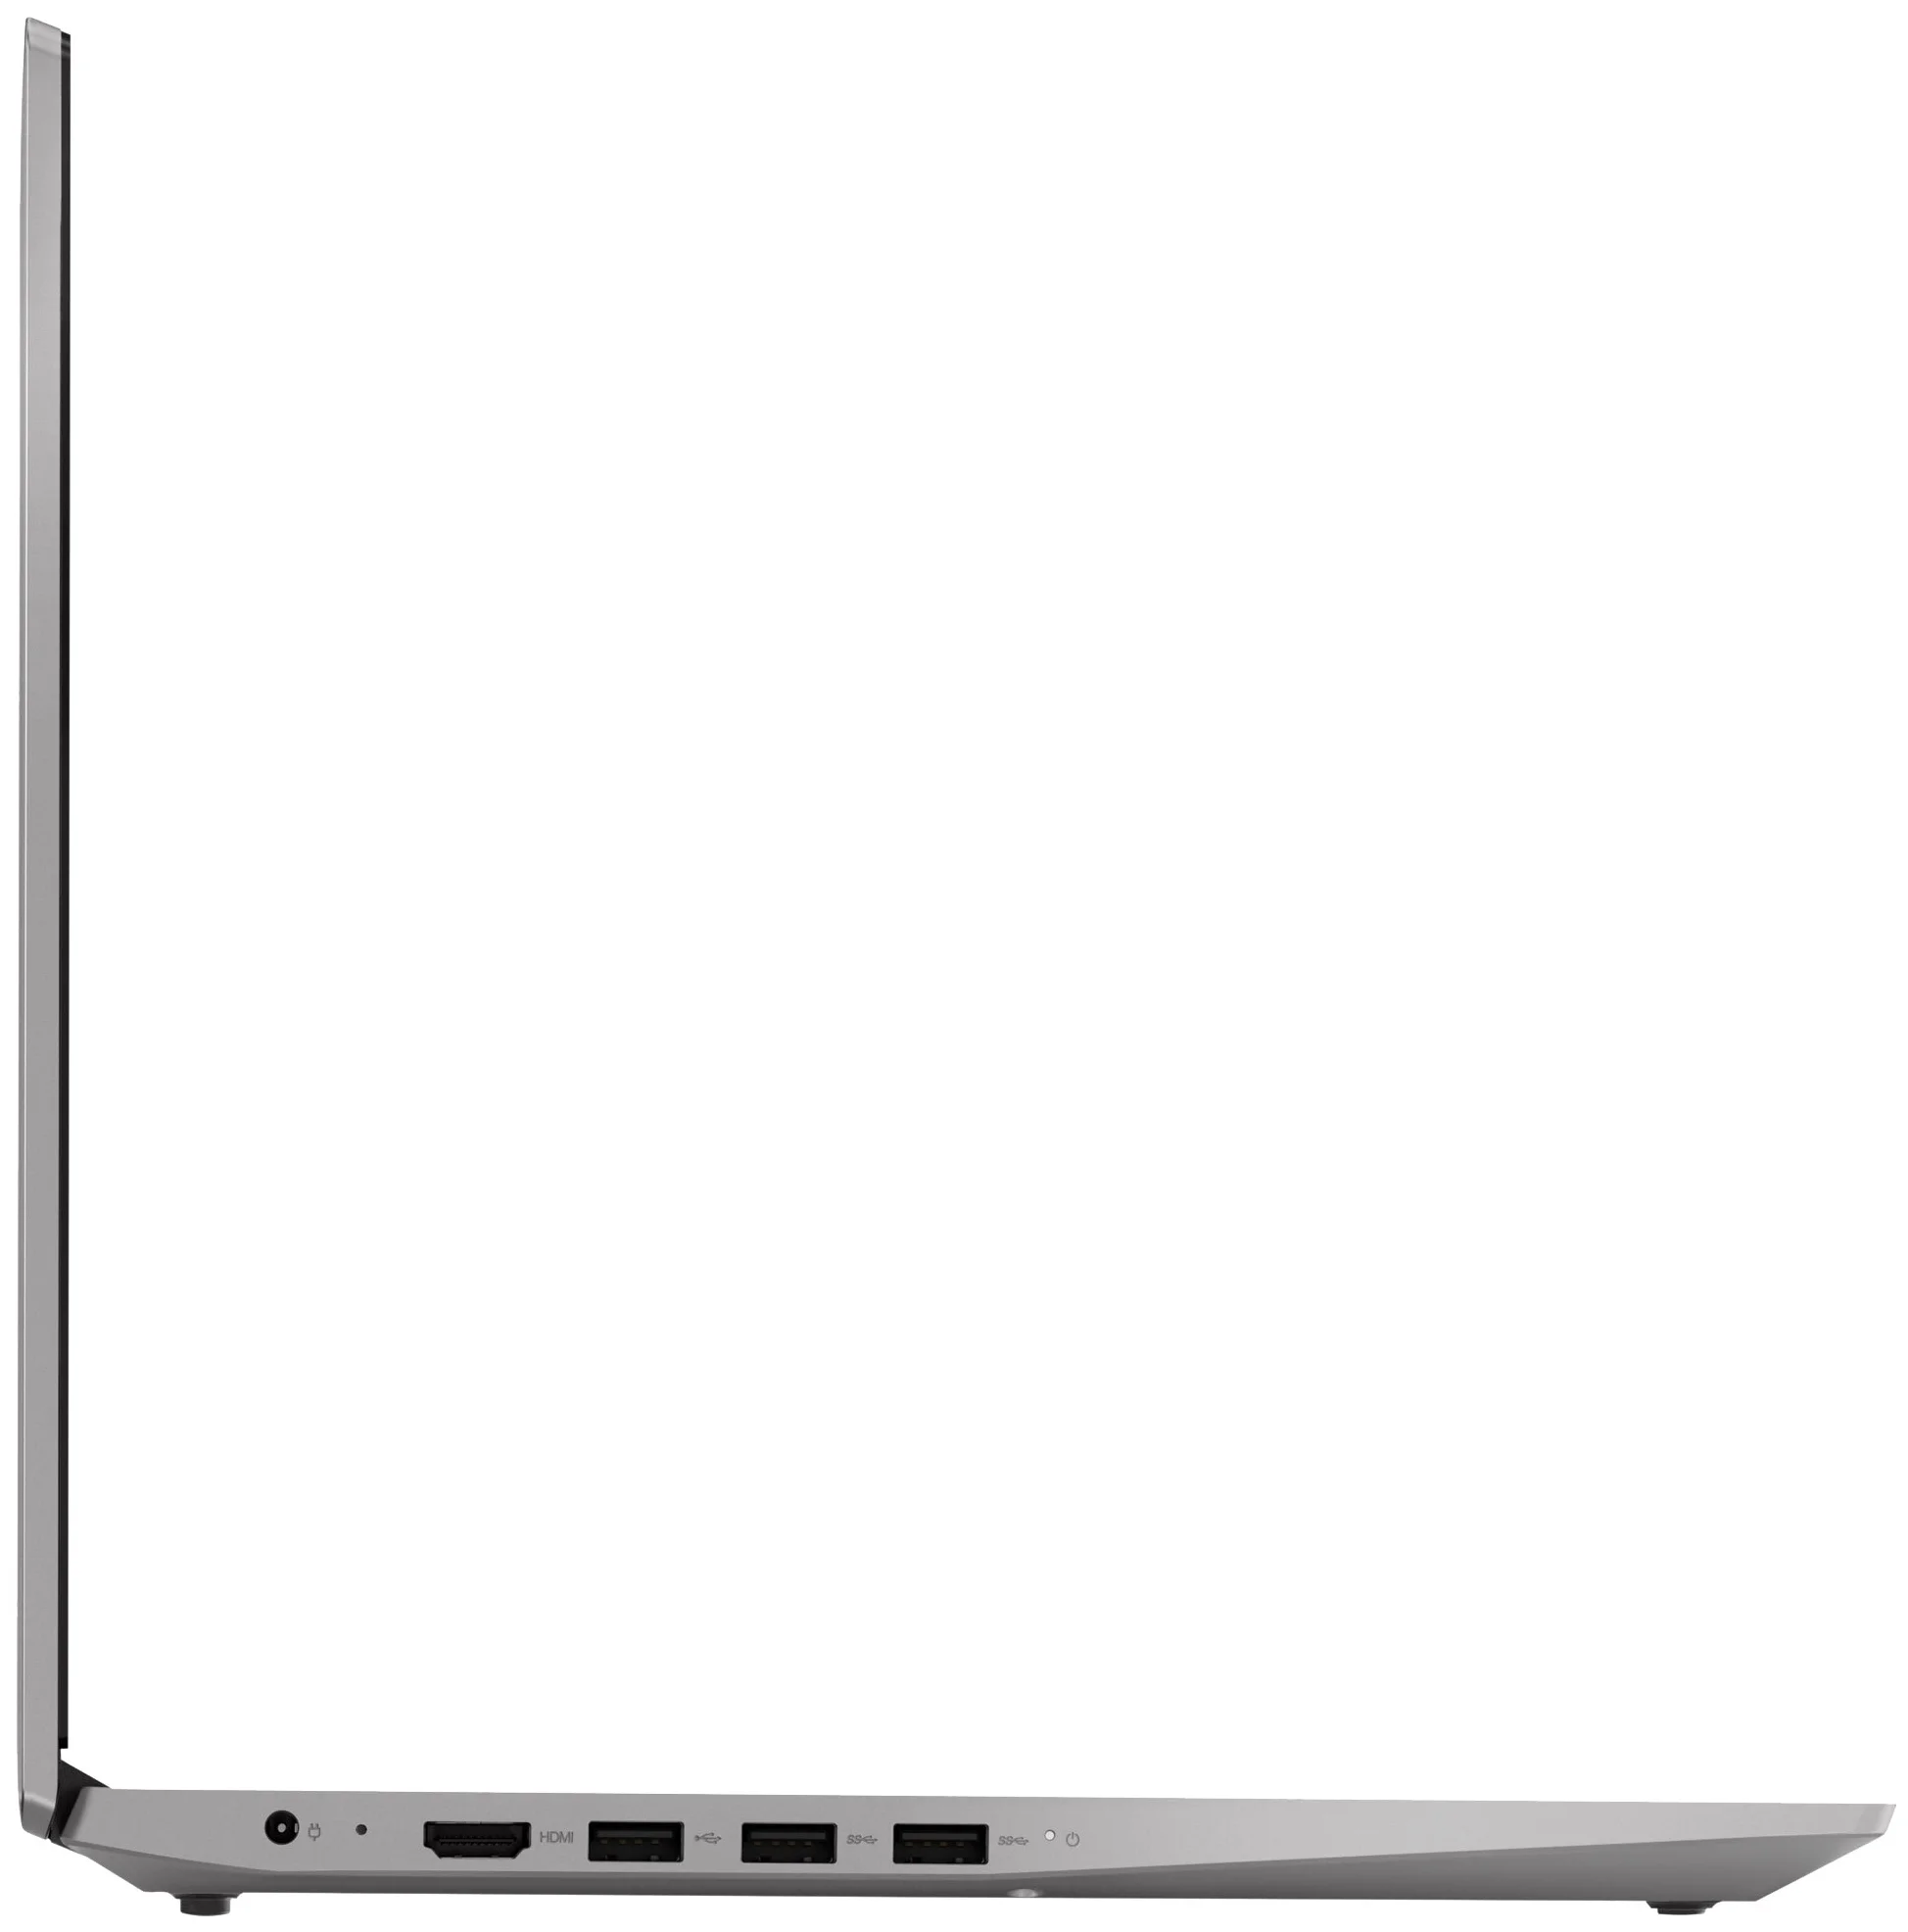 15.6" Lenovo IdeaPad S145-15IIL - разъемы: USB 2.0 Type A, USB 3.1 Type A x 2, выход HDMI, микрофон/наушники Combo